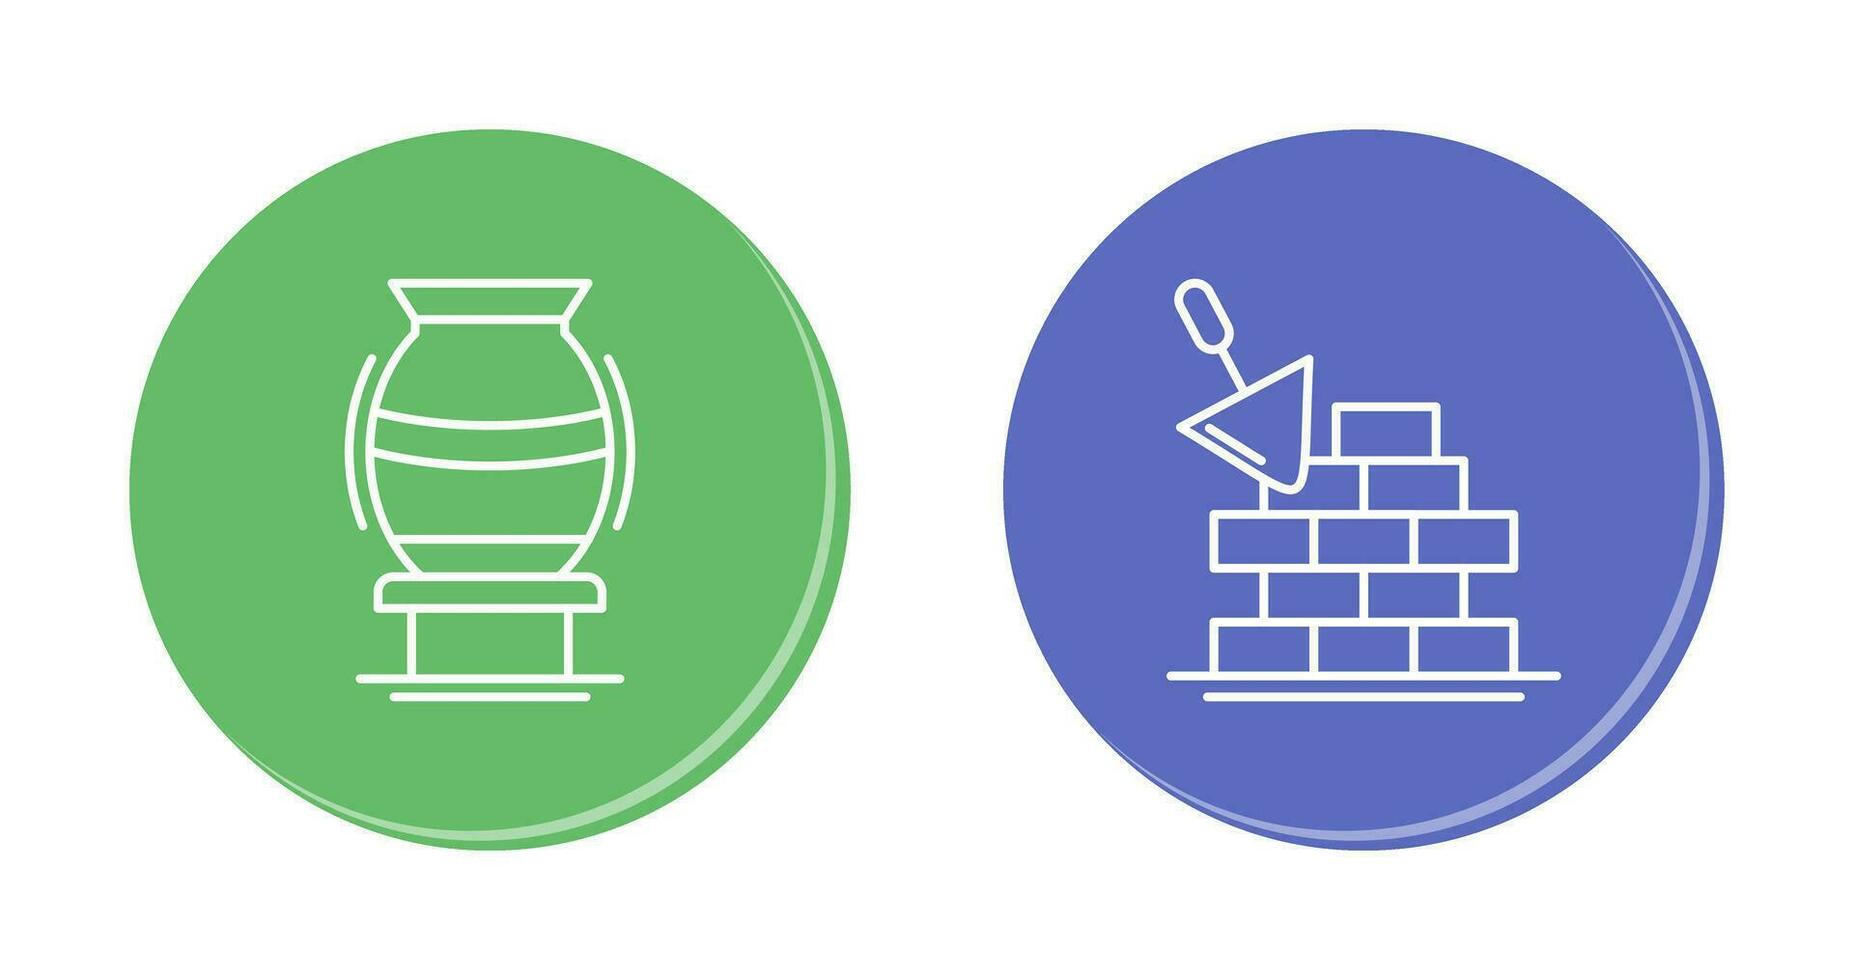 vase and brickwall Icon vector